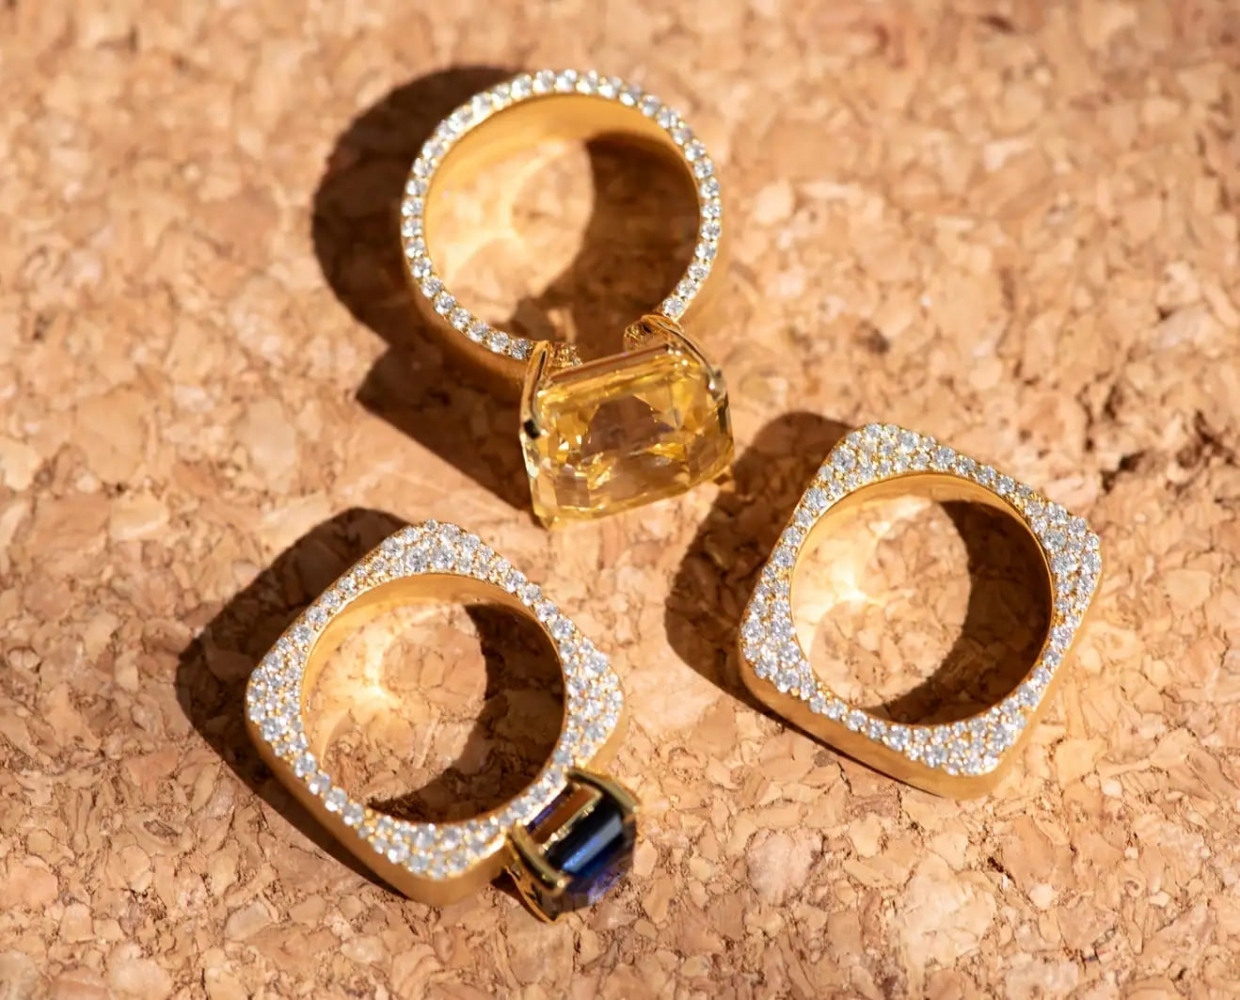 1,2 Carat White Diamond 18 Karat Matte Yellow Gold Ring Sahara Collection by D&A